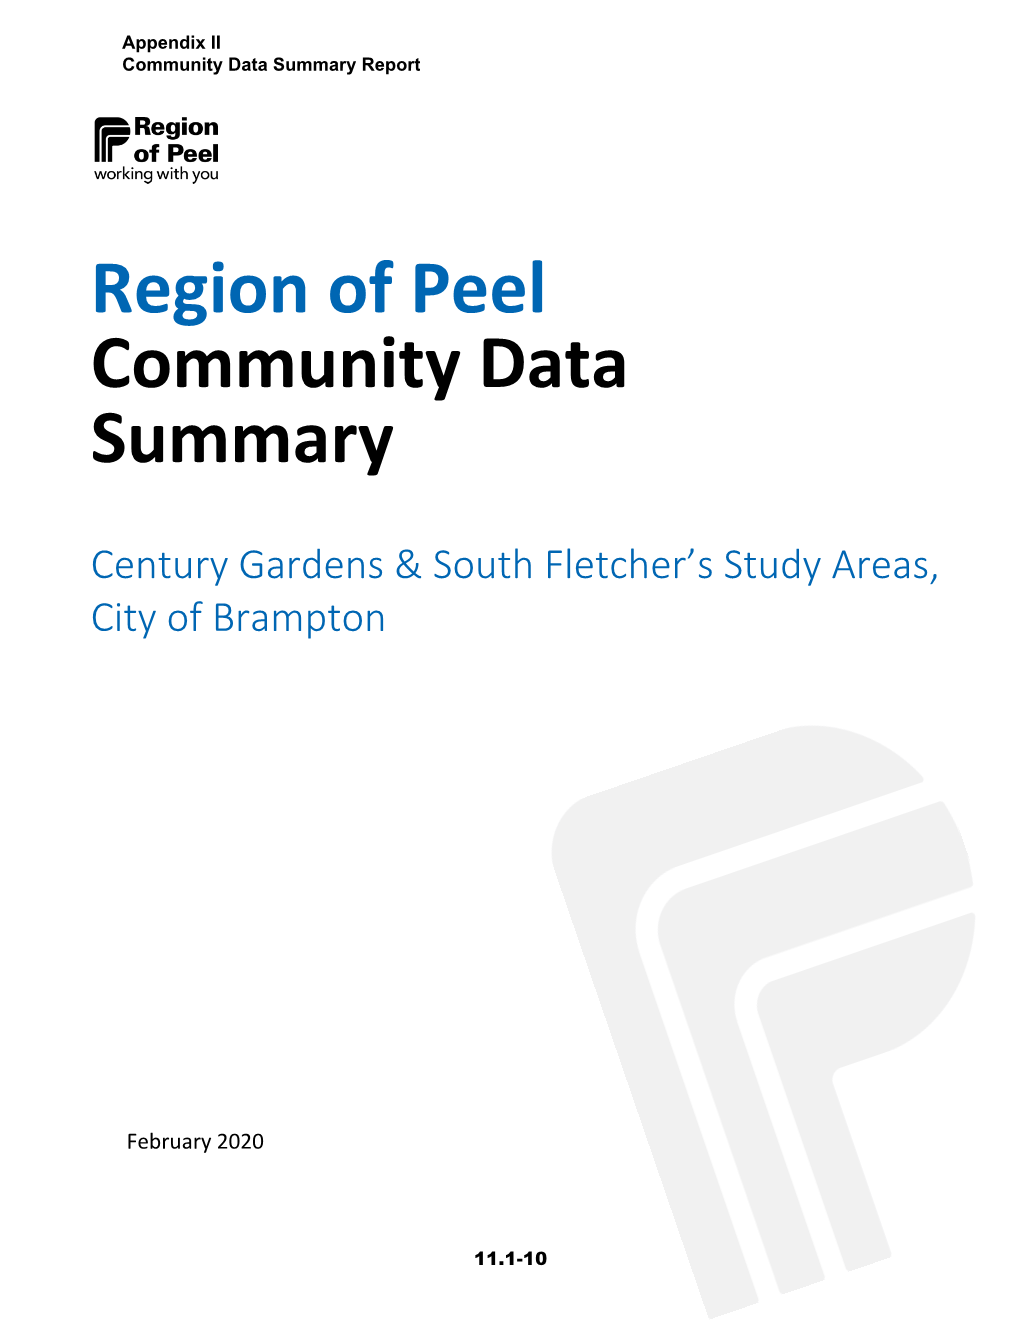 Region of Peel Community Data Summary